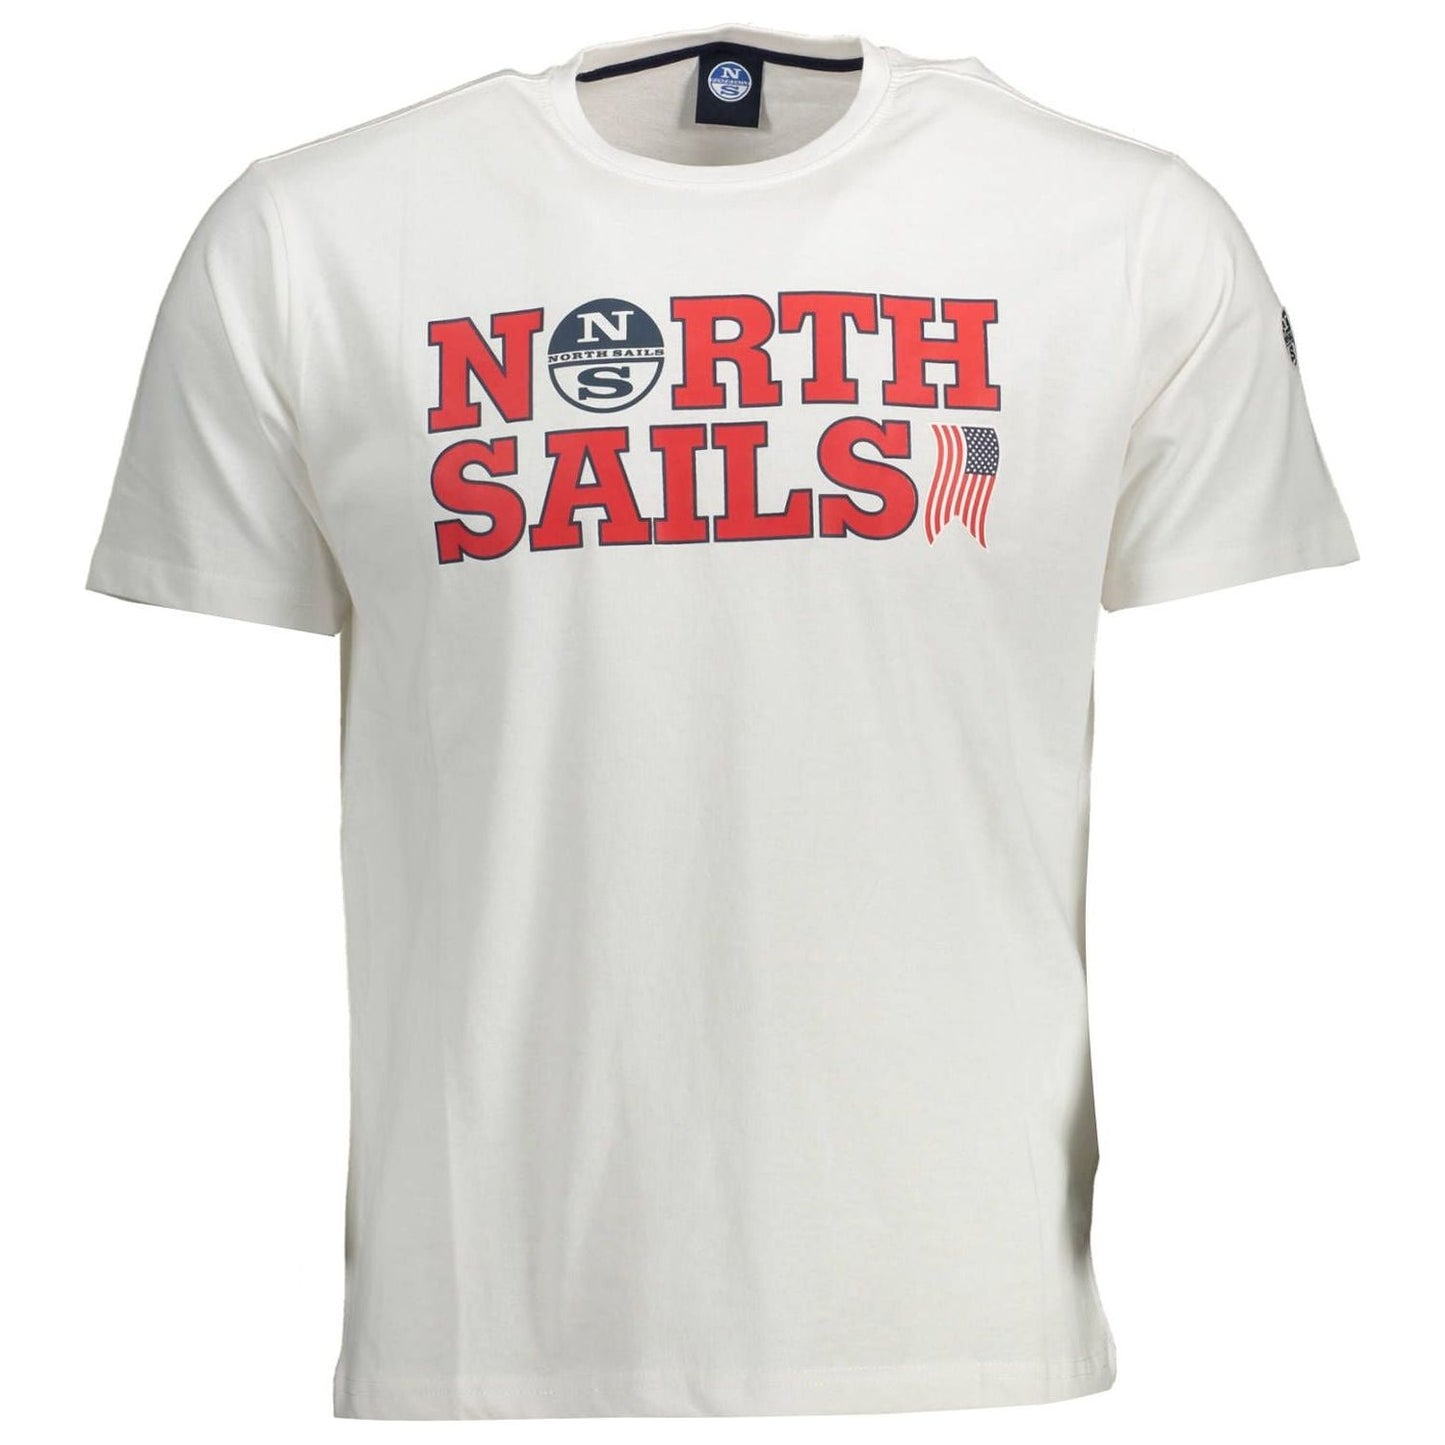 North Sails Sleek White Cotton Crew Neck Tee sleek-white-cotton-crew-neck-tee